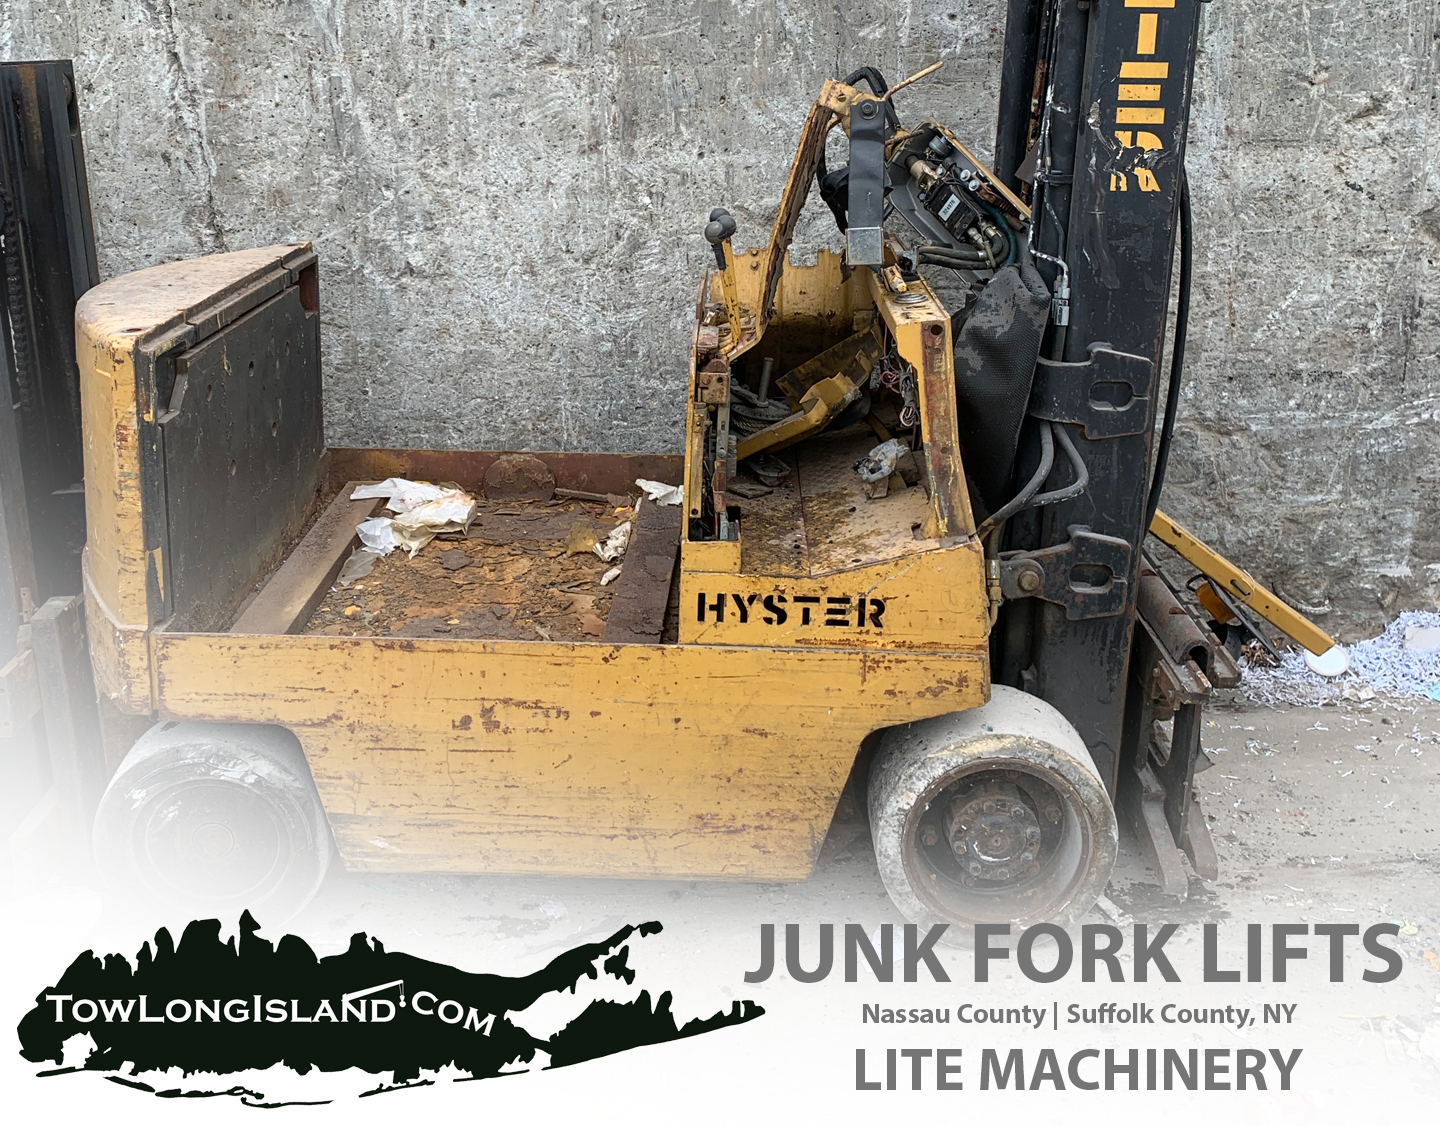 Junk Fork Lifts Photo | TowLongIsland.com